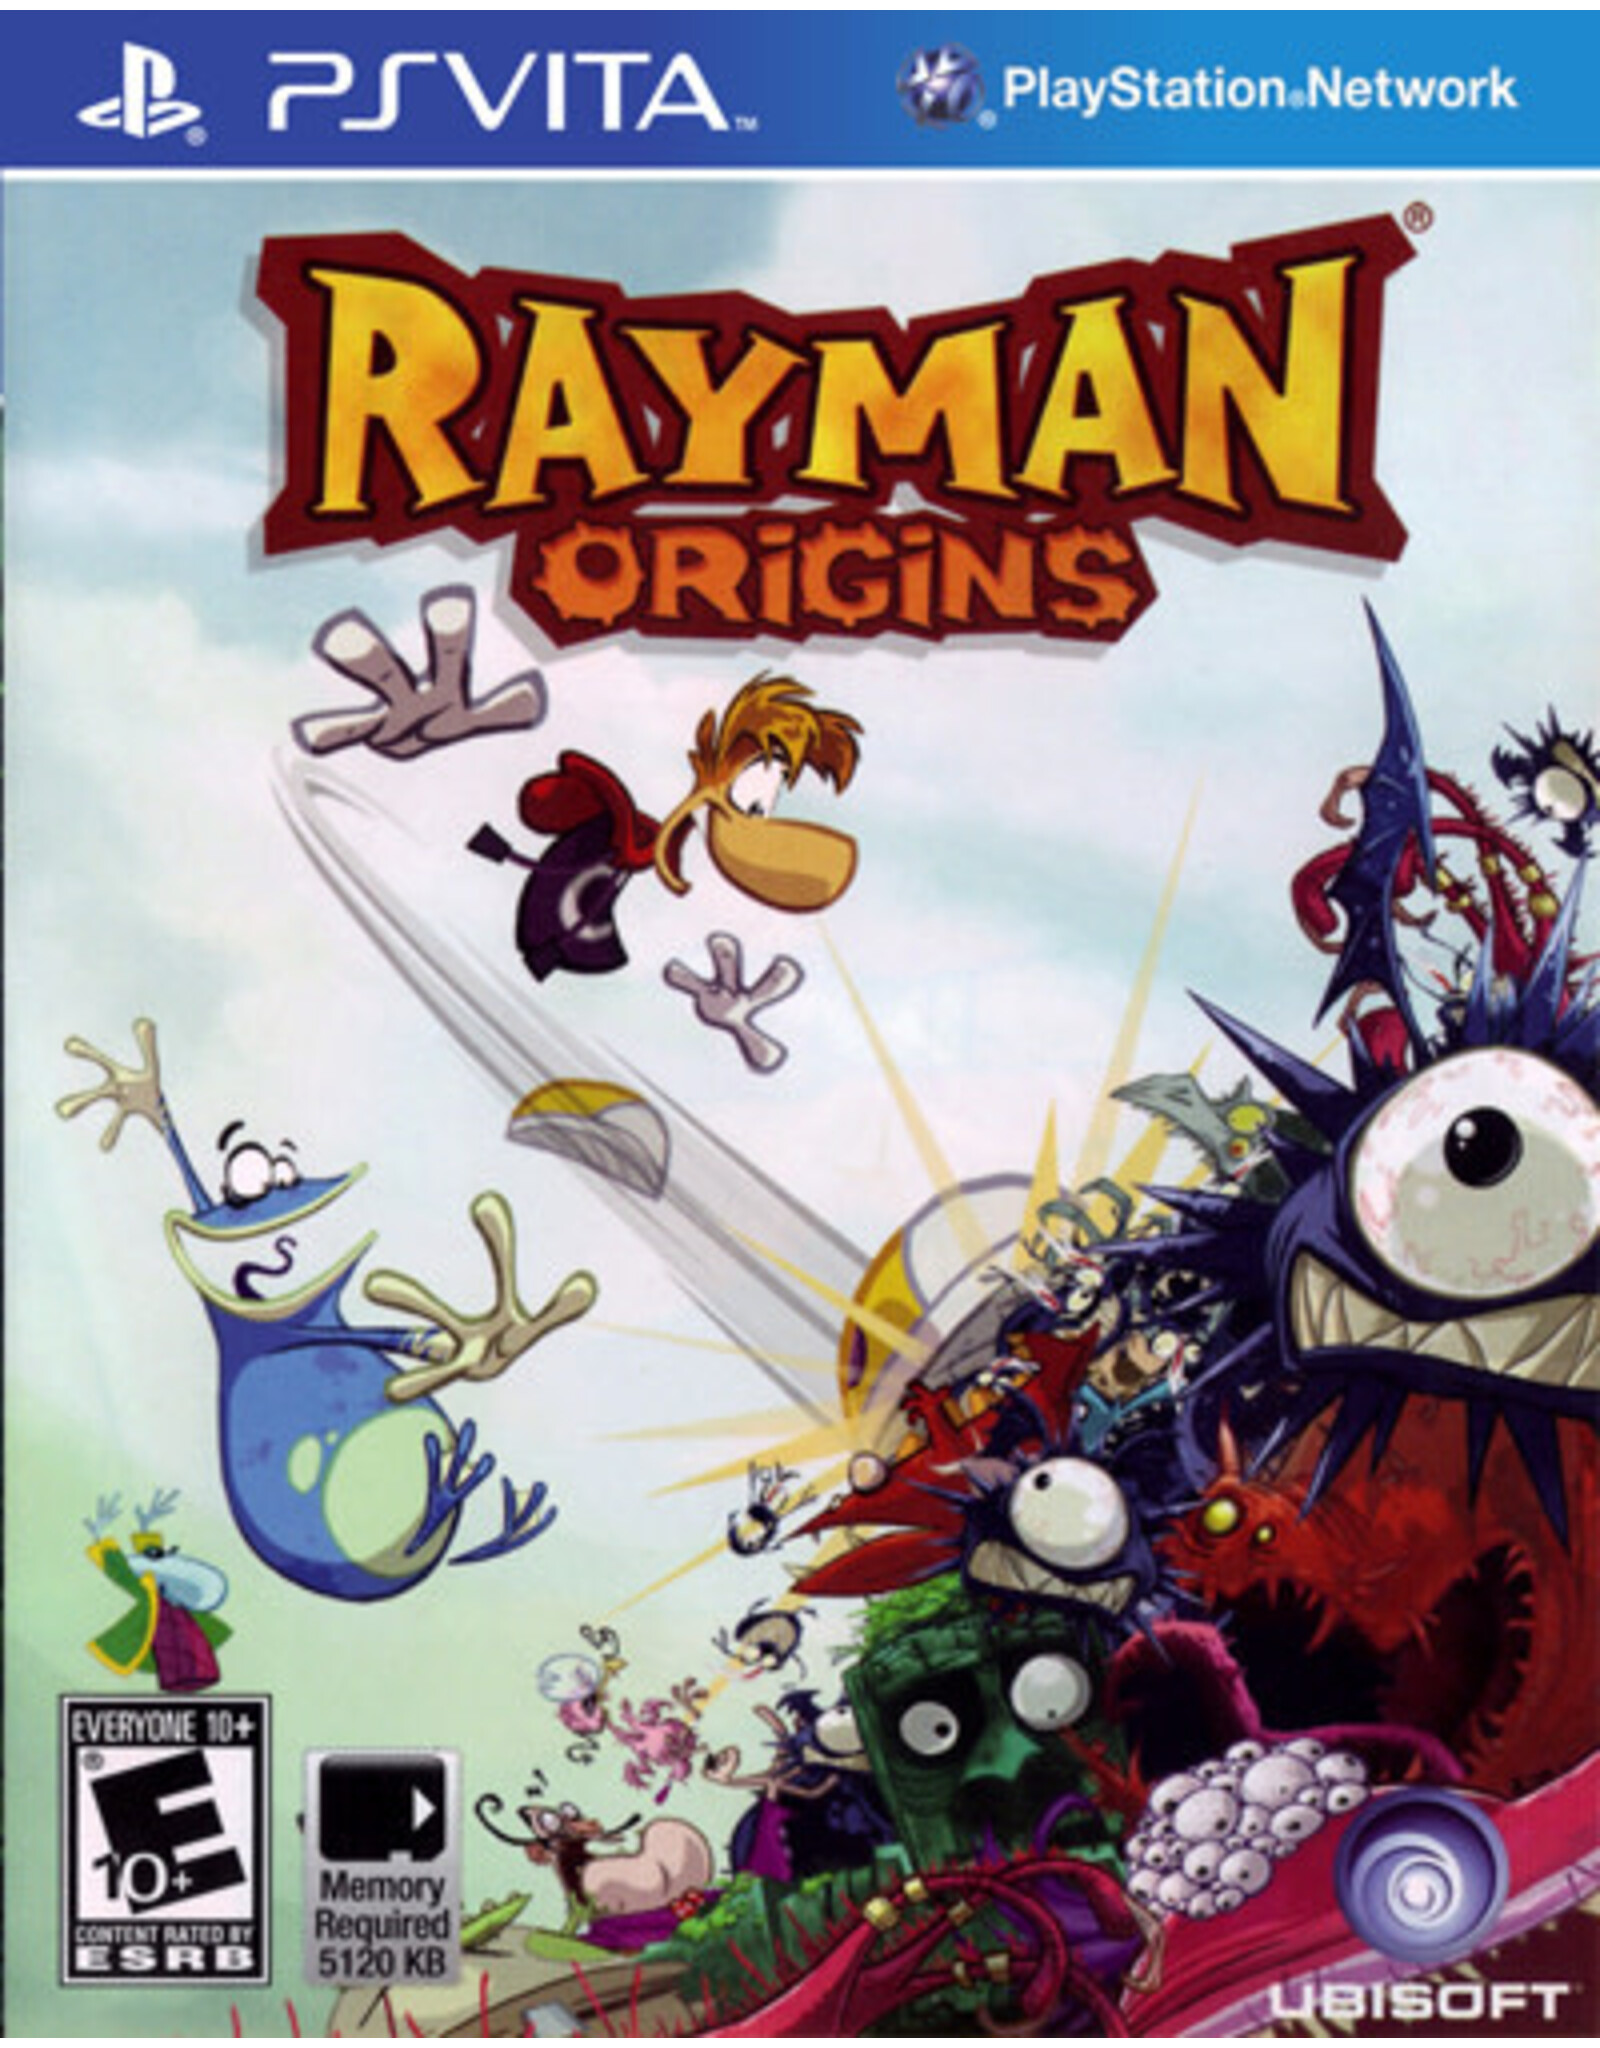 Playstation Vita Rayman Origins (Cart Only)